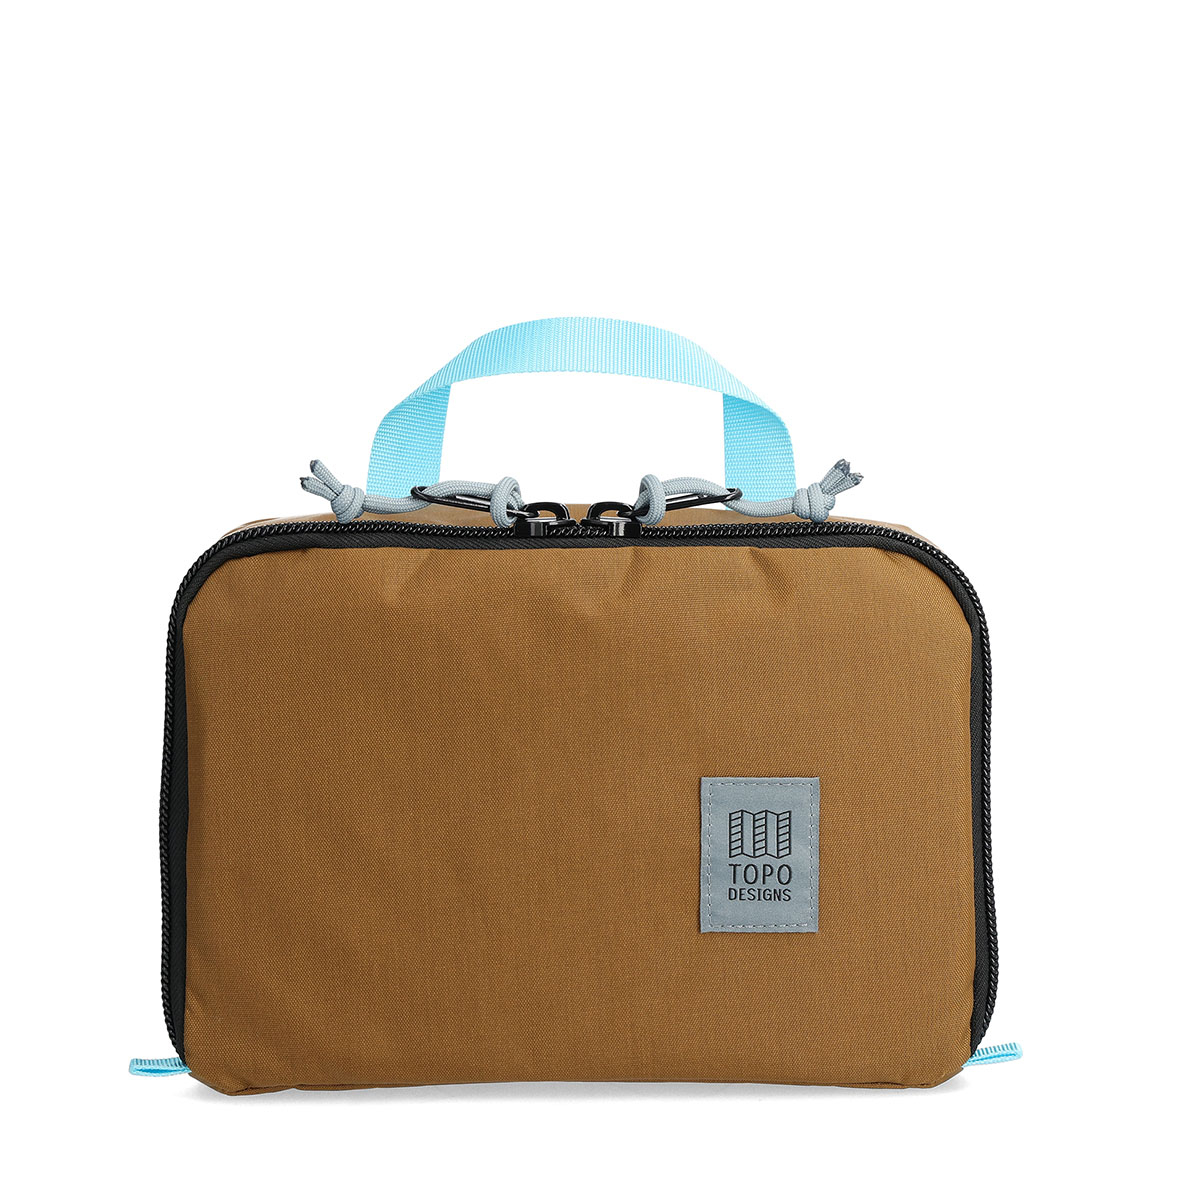 Topo Designs Pack Bag 5L Dark Khaki, het optimaliseren van je bagage is nog nooit zo eenvoudig geweest